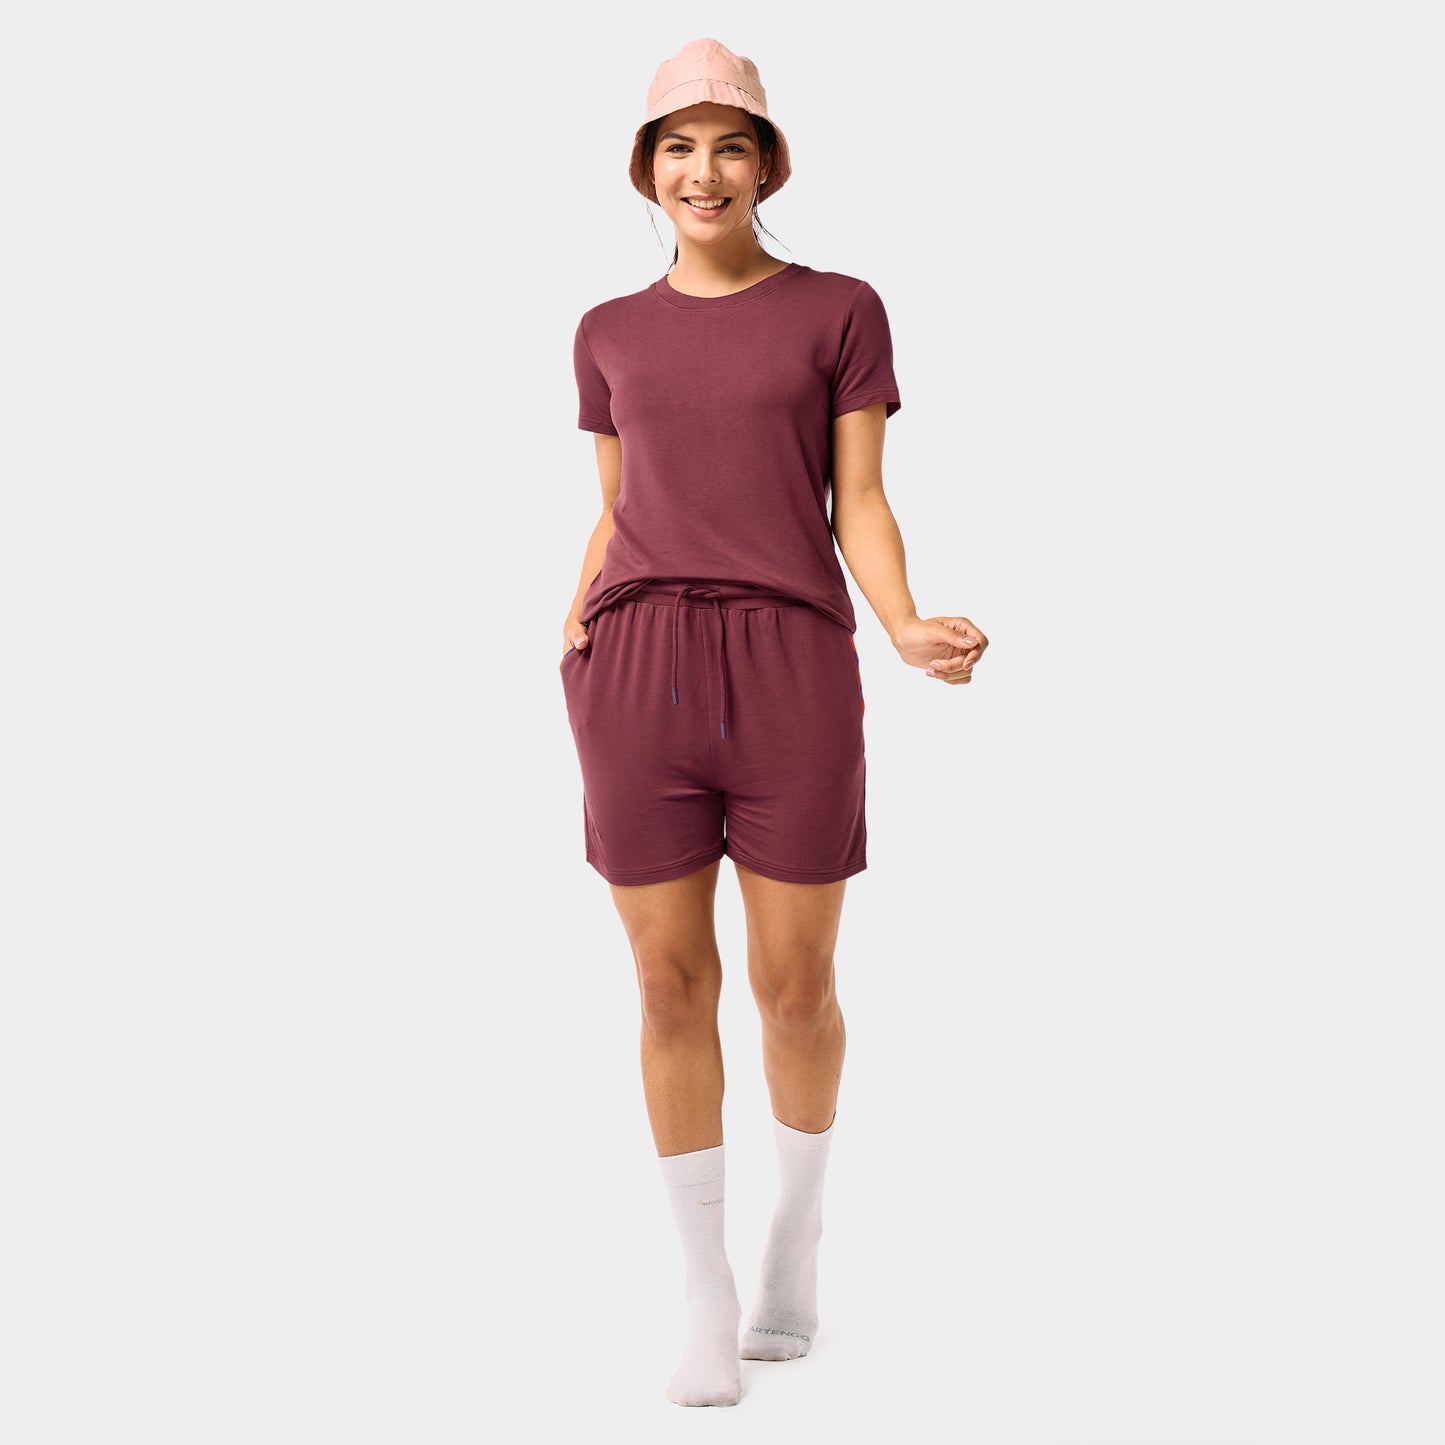 24/7 Women's Shorts - Merlot